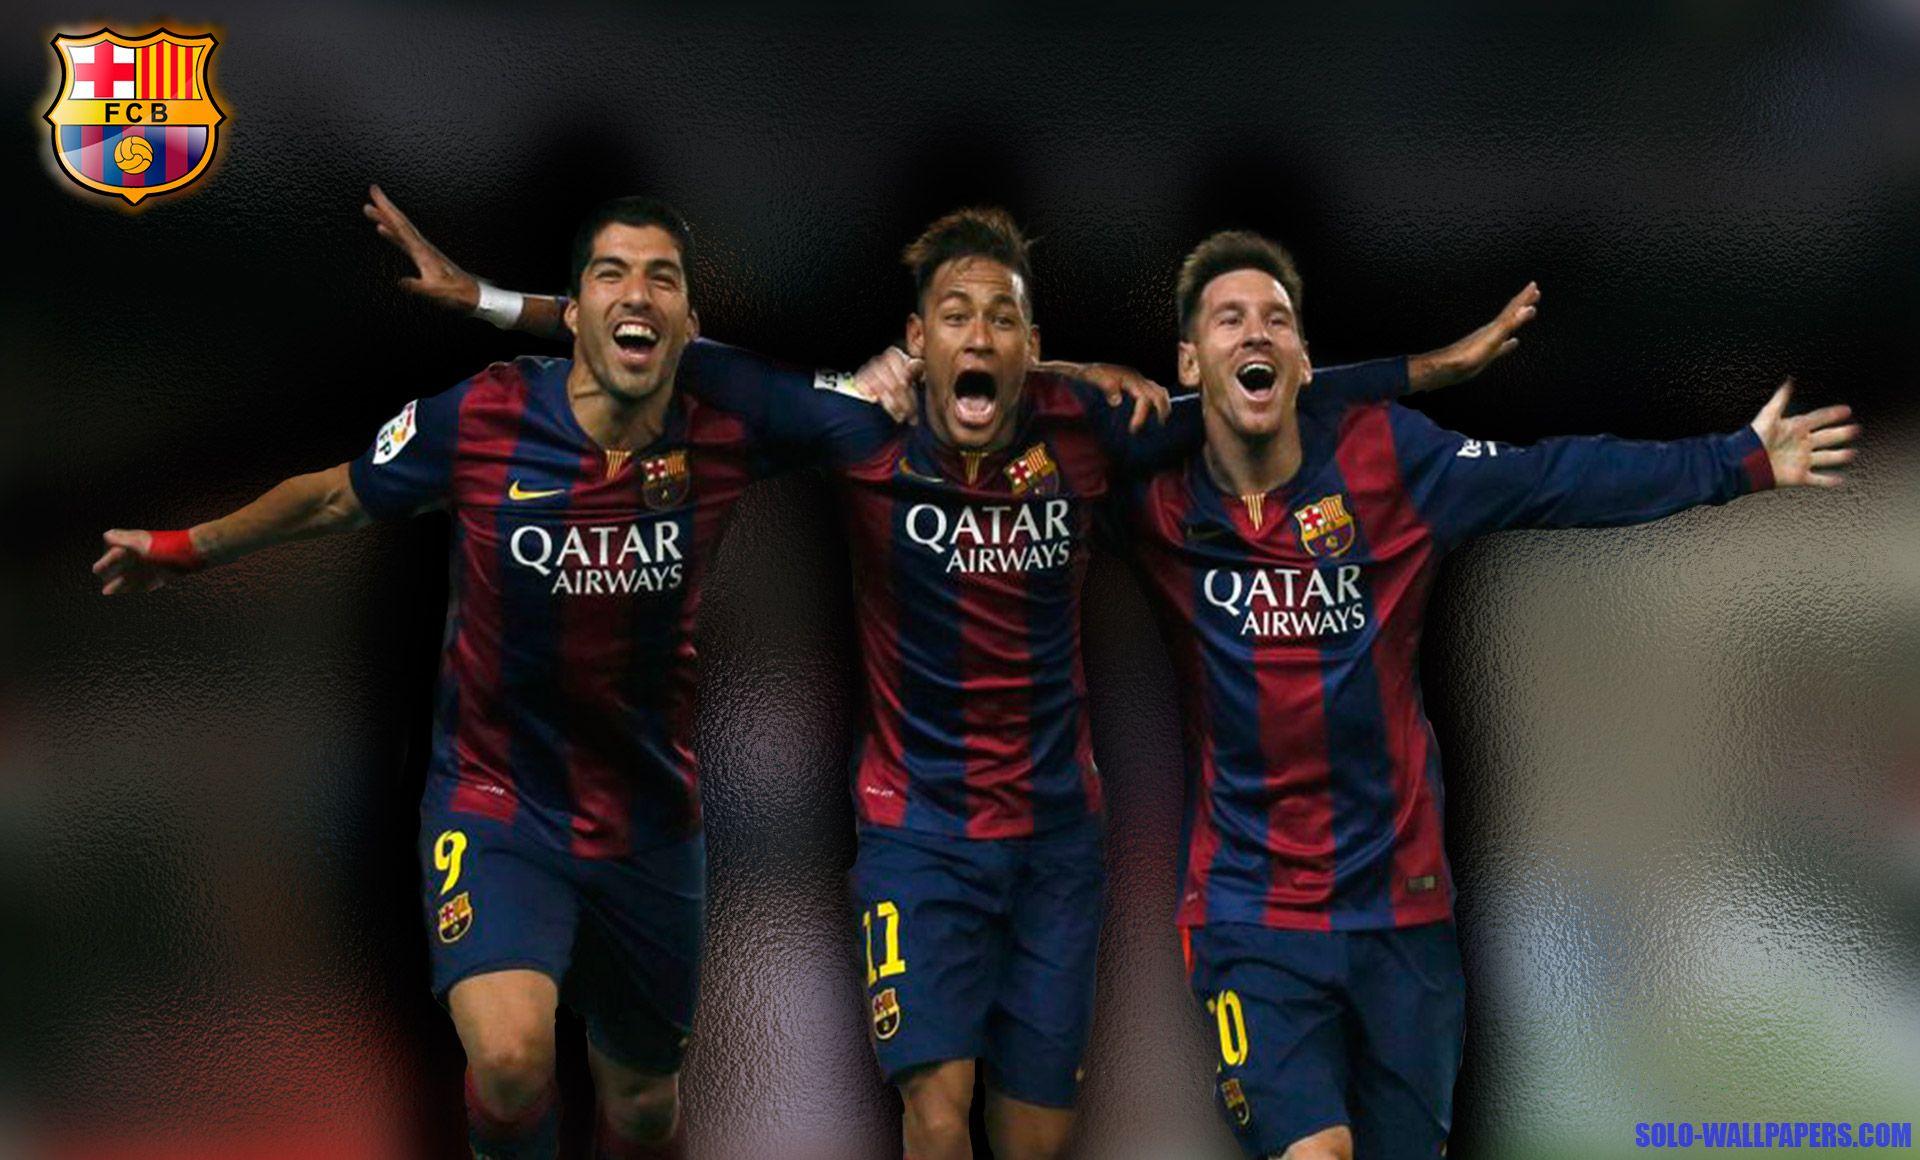 Messi Suarez Neymar Wallpapers